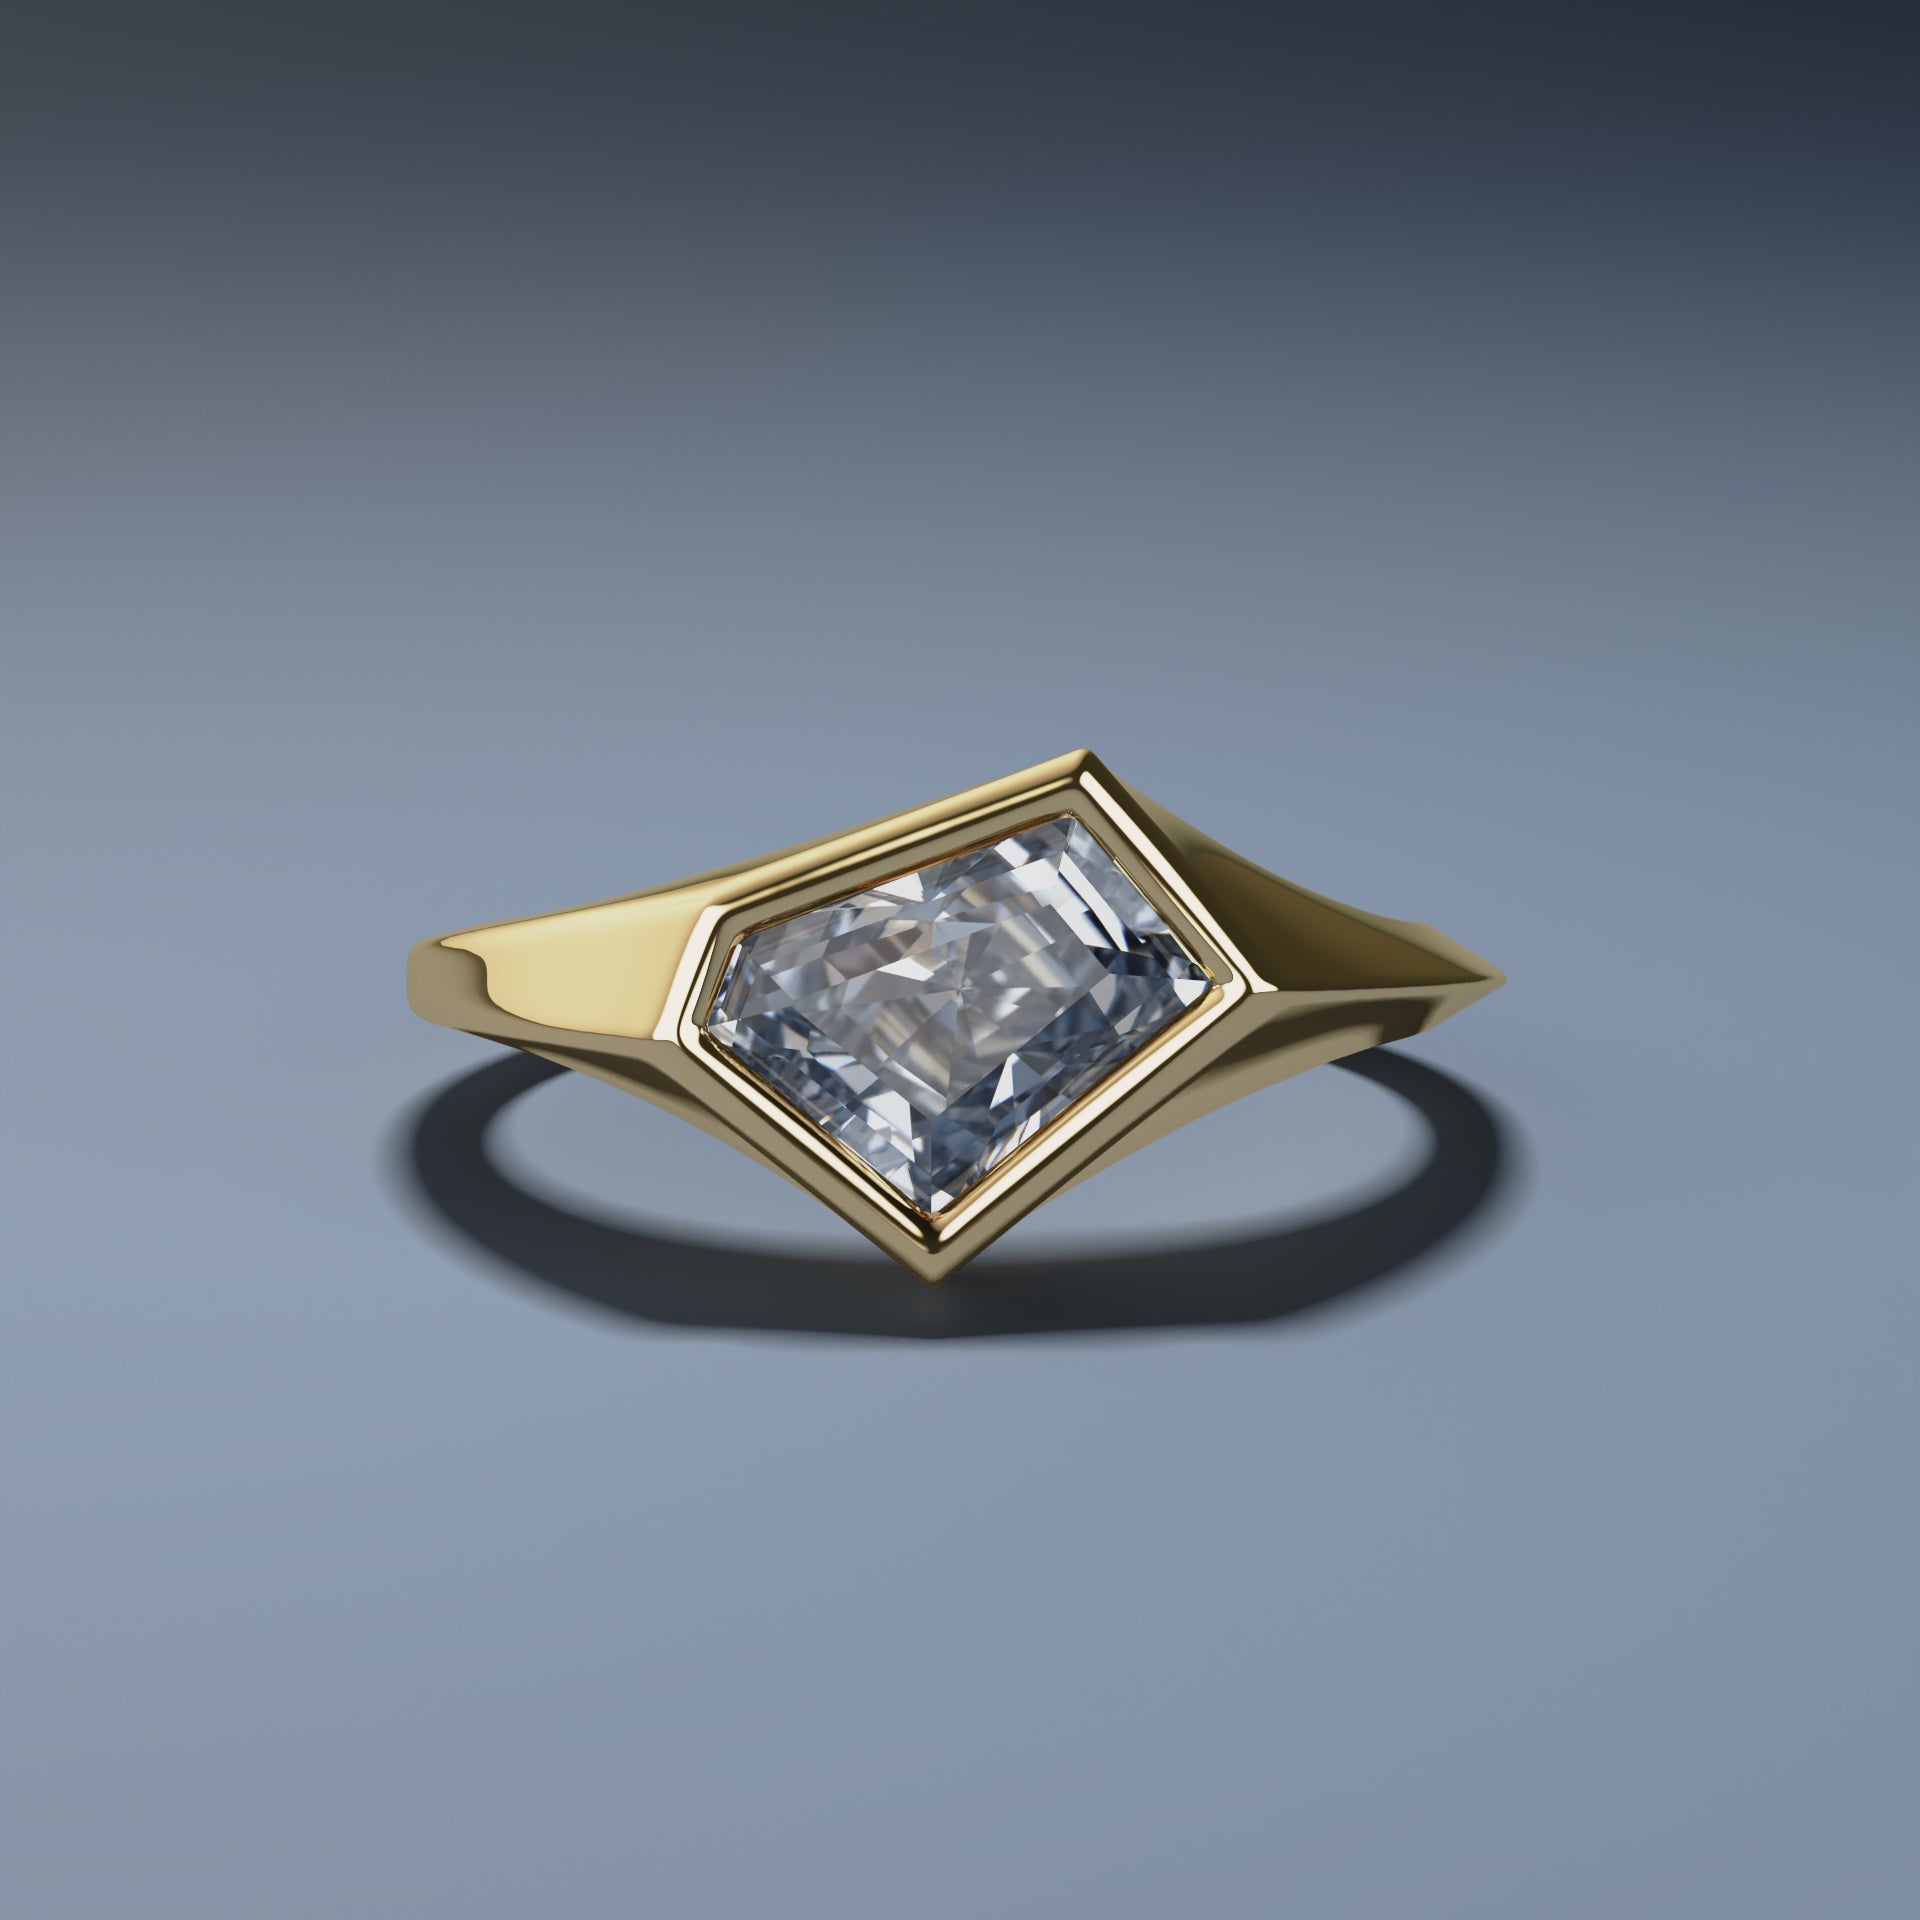 1ct Fancy Cut Diamond Ring - JUXTAPOSE